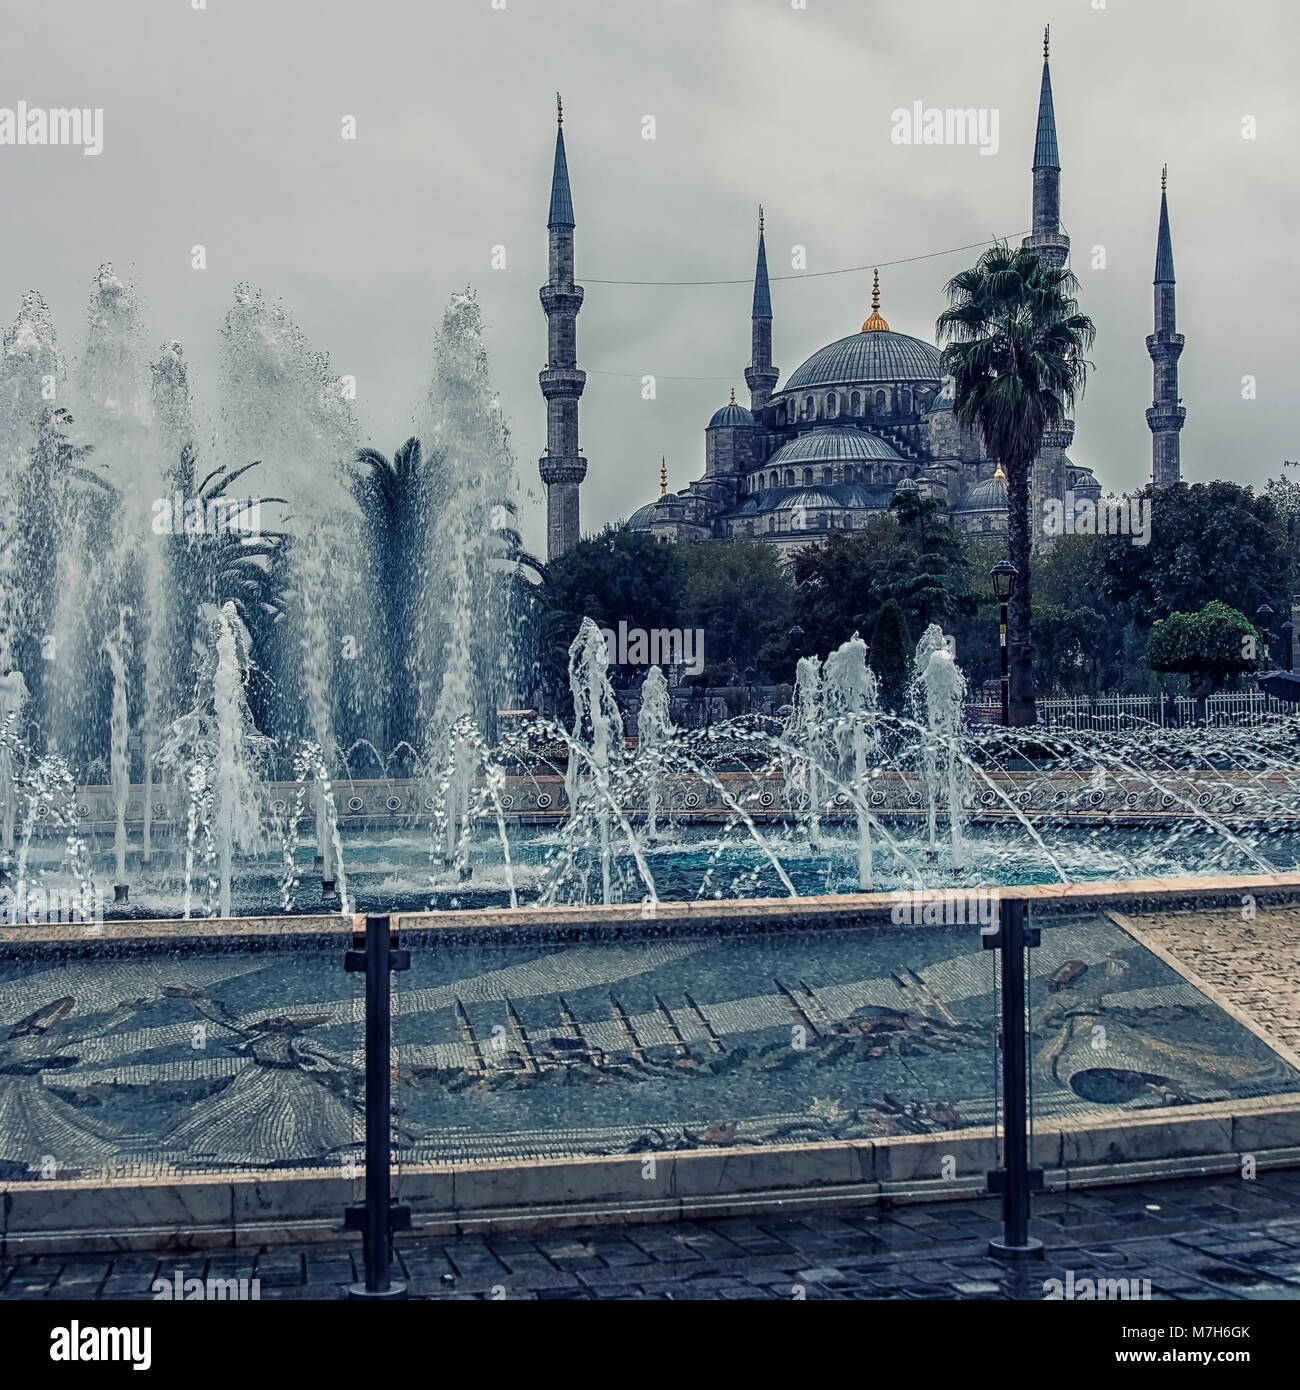 Sultan ahmet mosque in Istanbul, Turkey Stock Photo